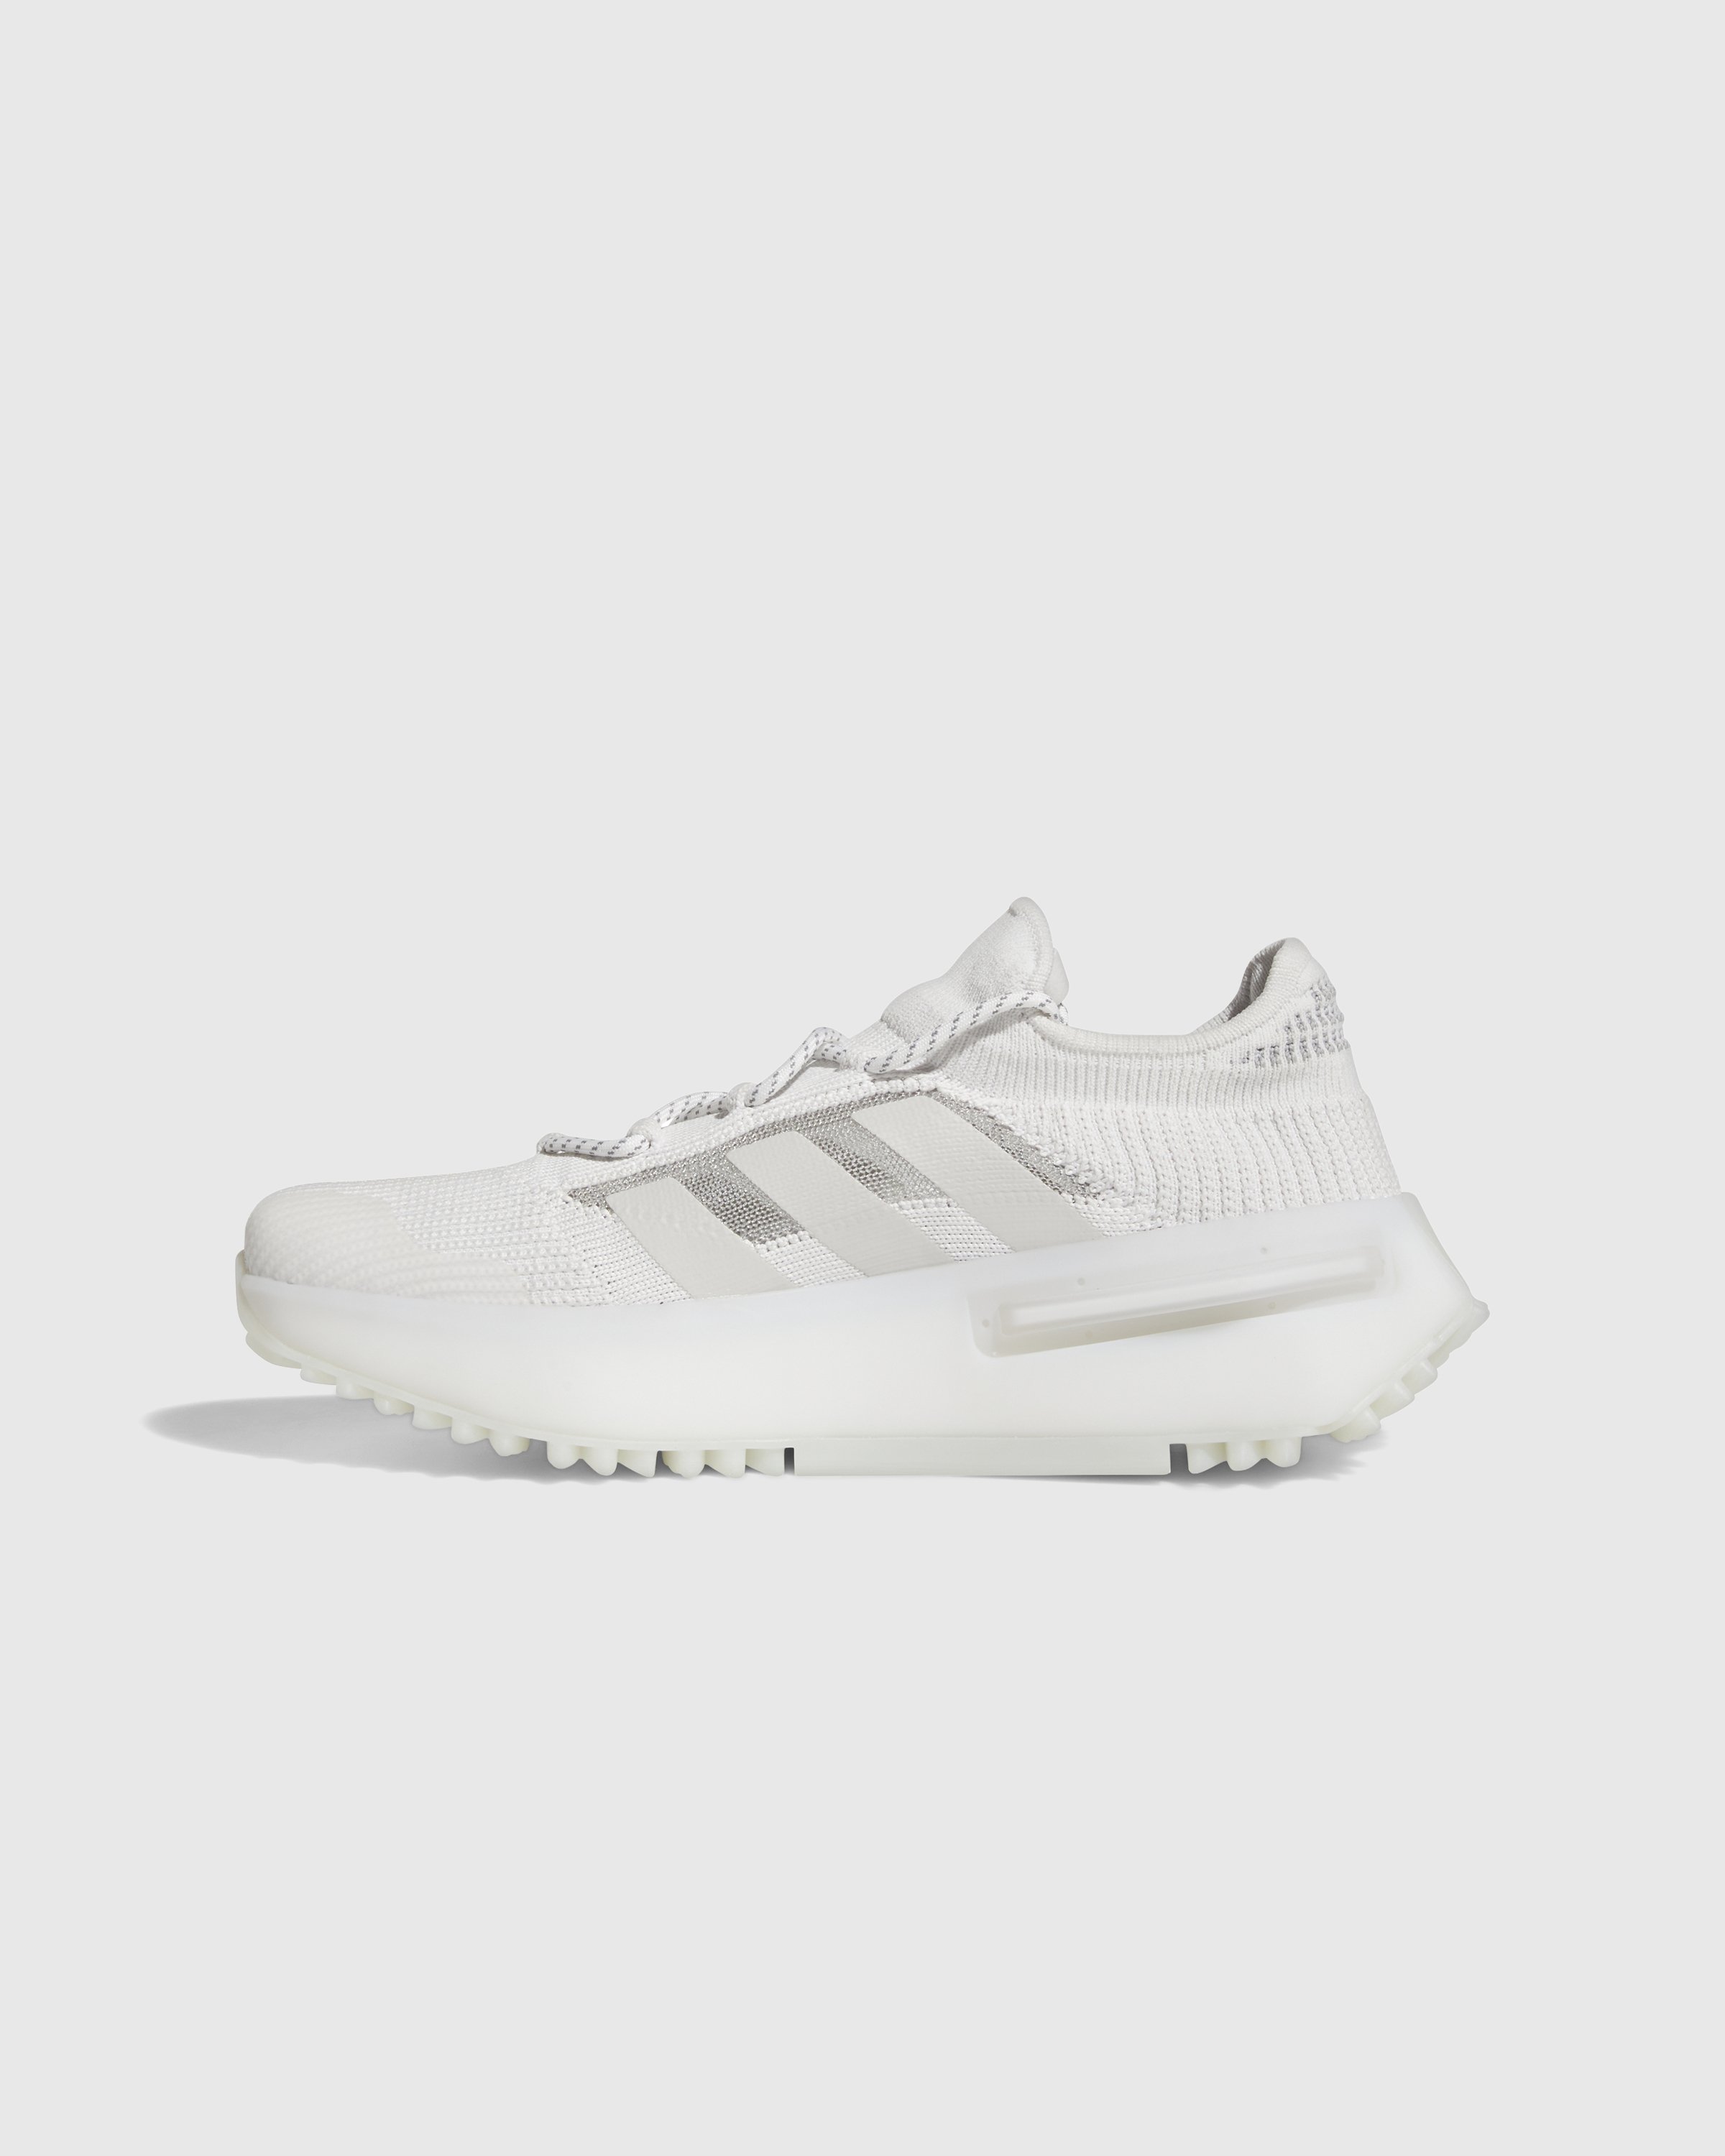 Adidas - NMD S1 - Footwear - White - Image 2